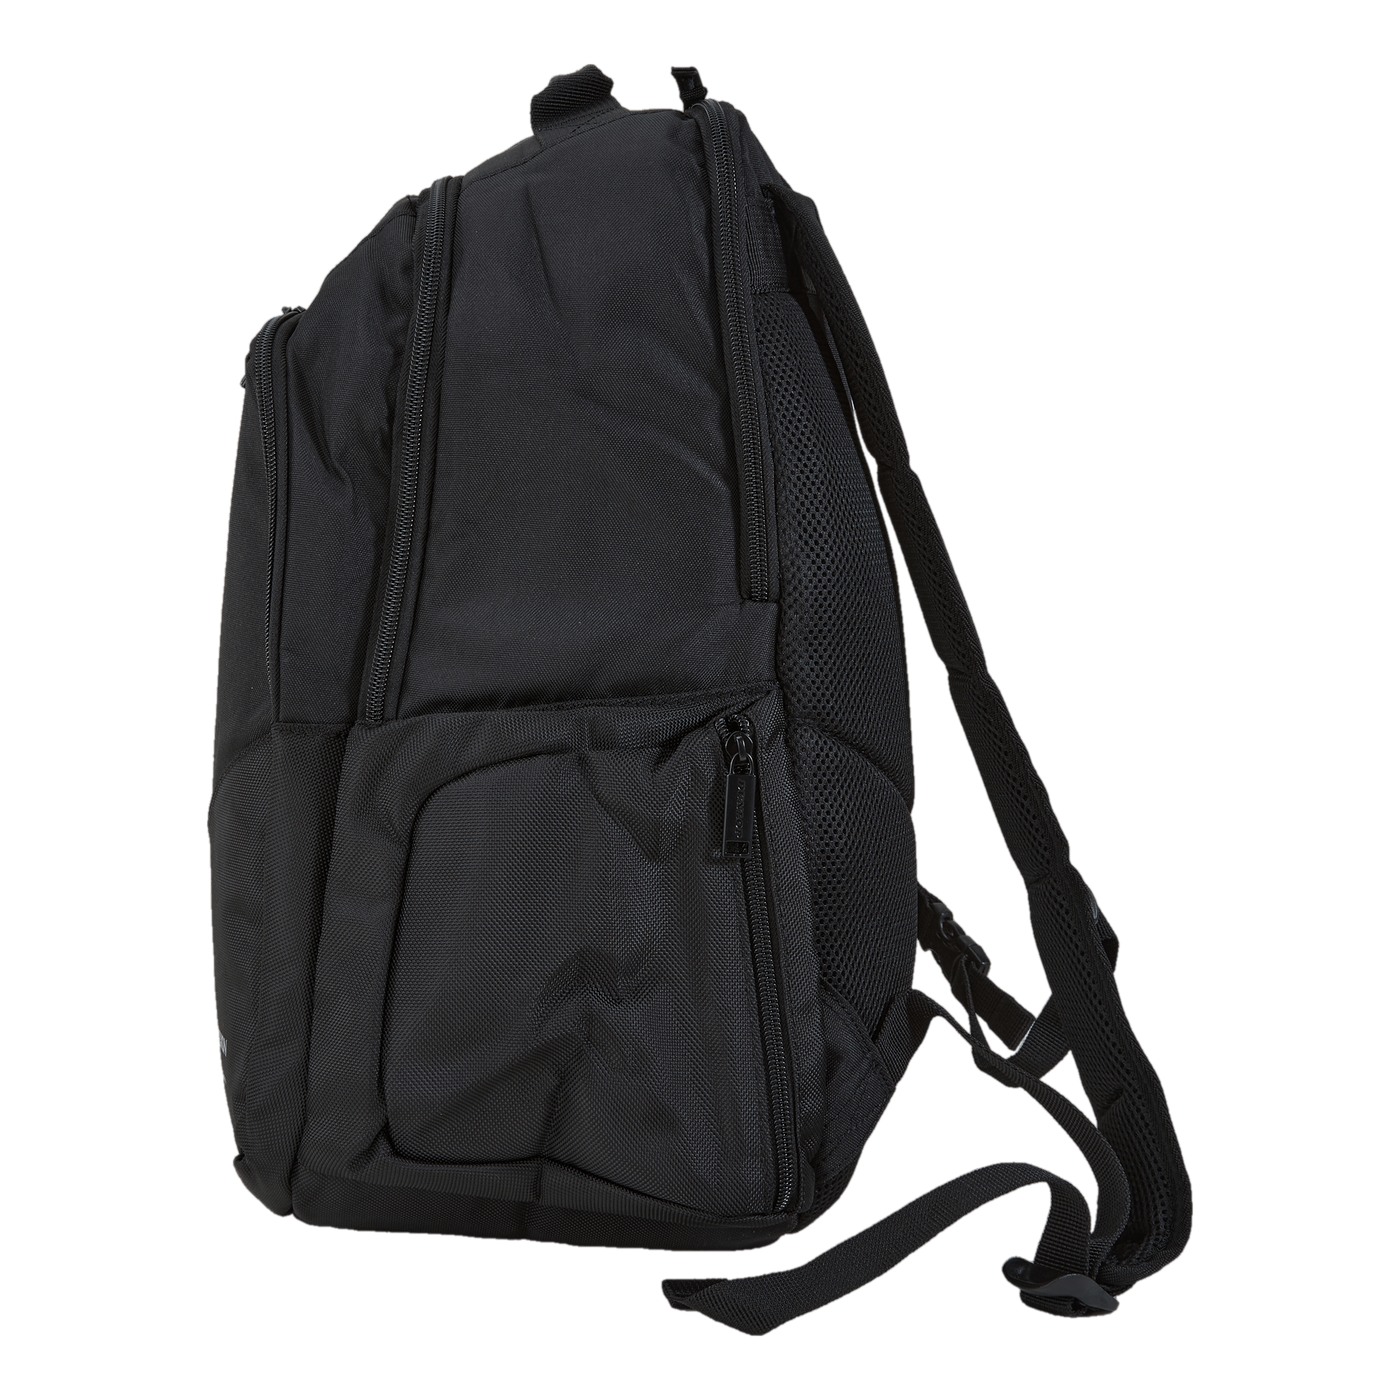 Cx-performance Backpack Black/black